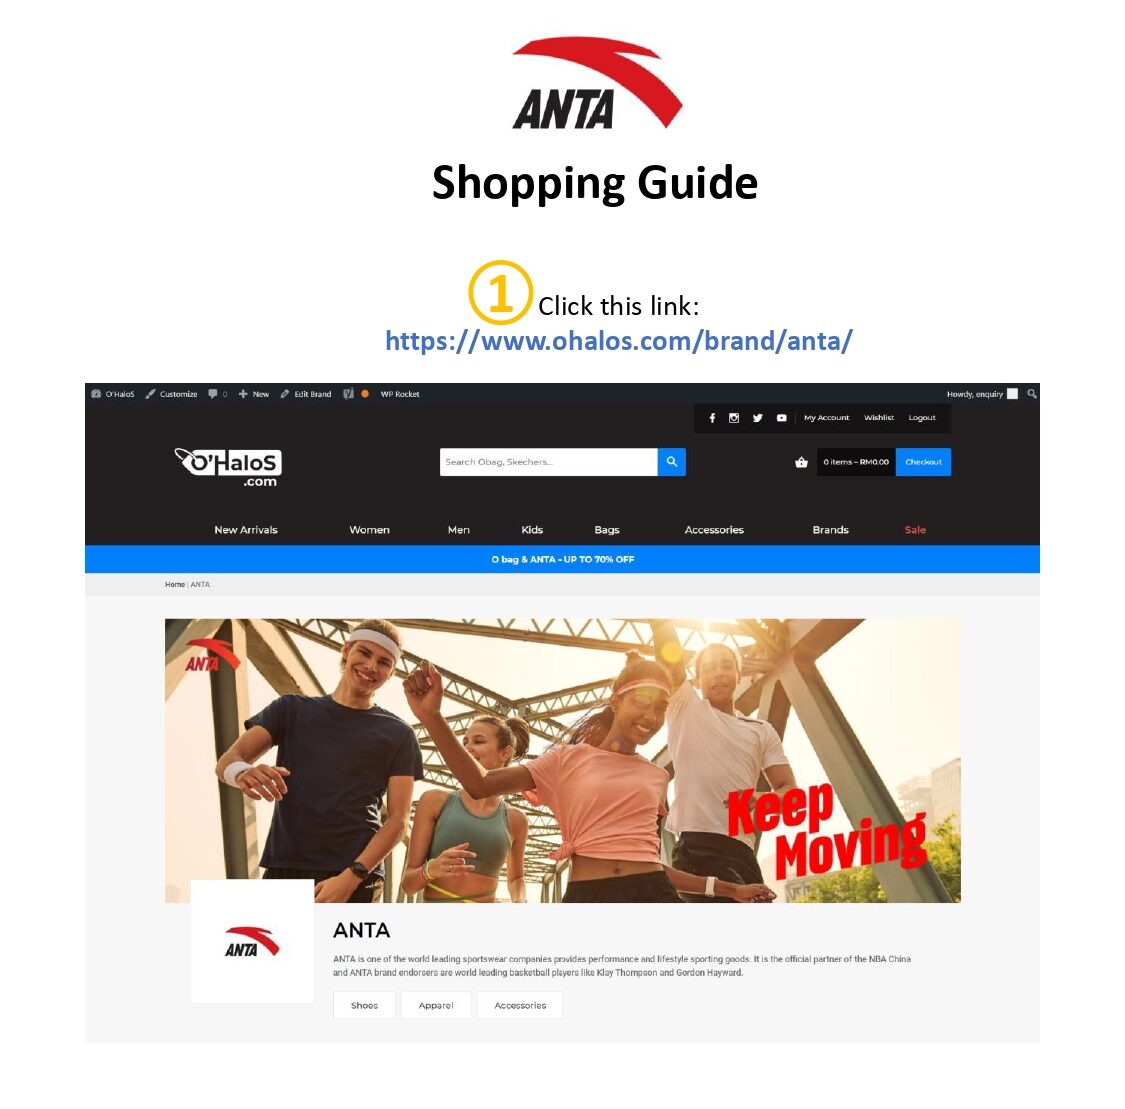 ANTA Shopping Guide 001 page 0001 e1626314710961 - Shopping Guide